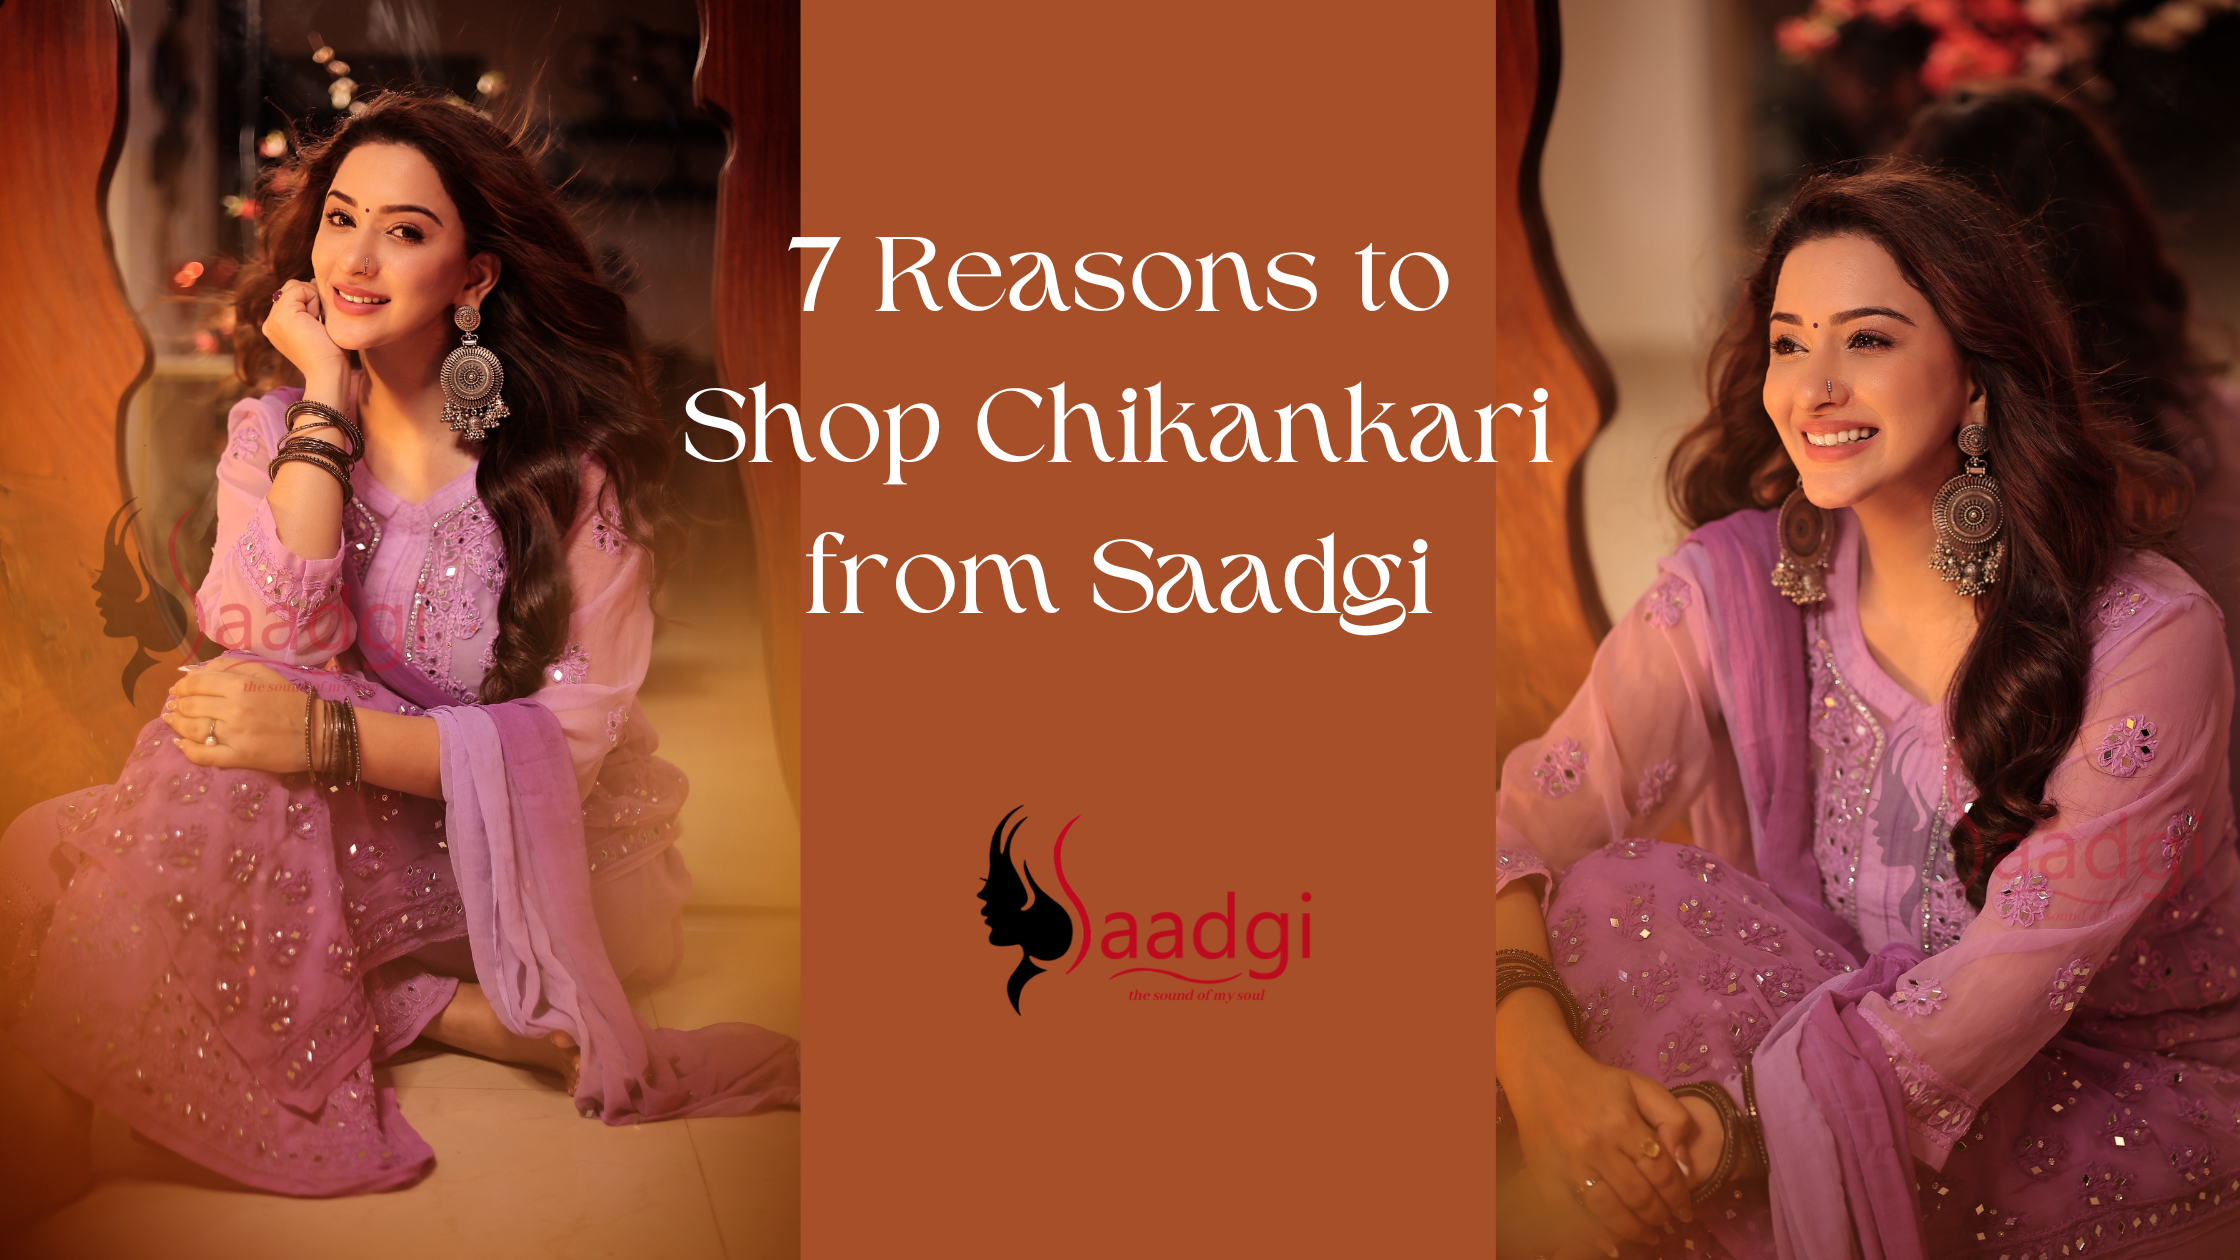 7 Reasons to Shop Chikankari from Saadgi